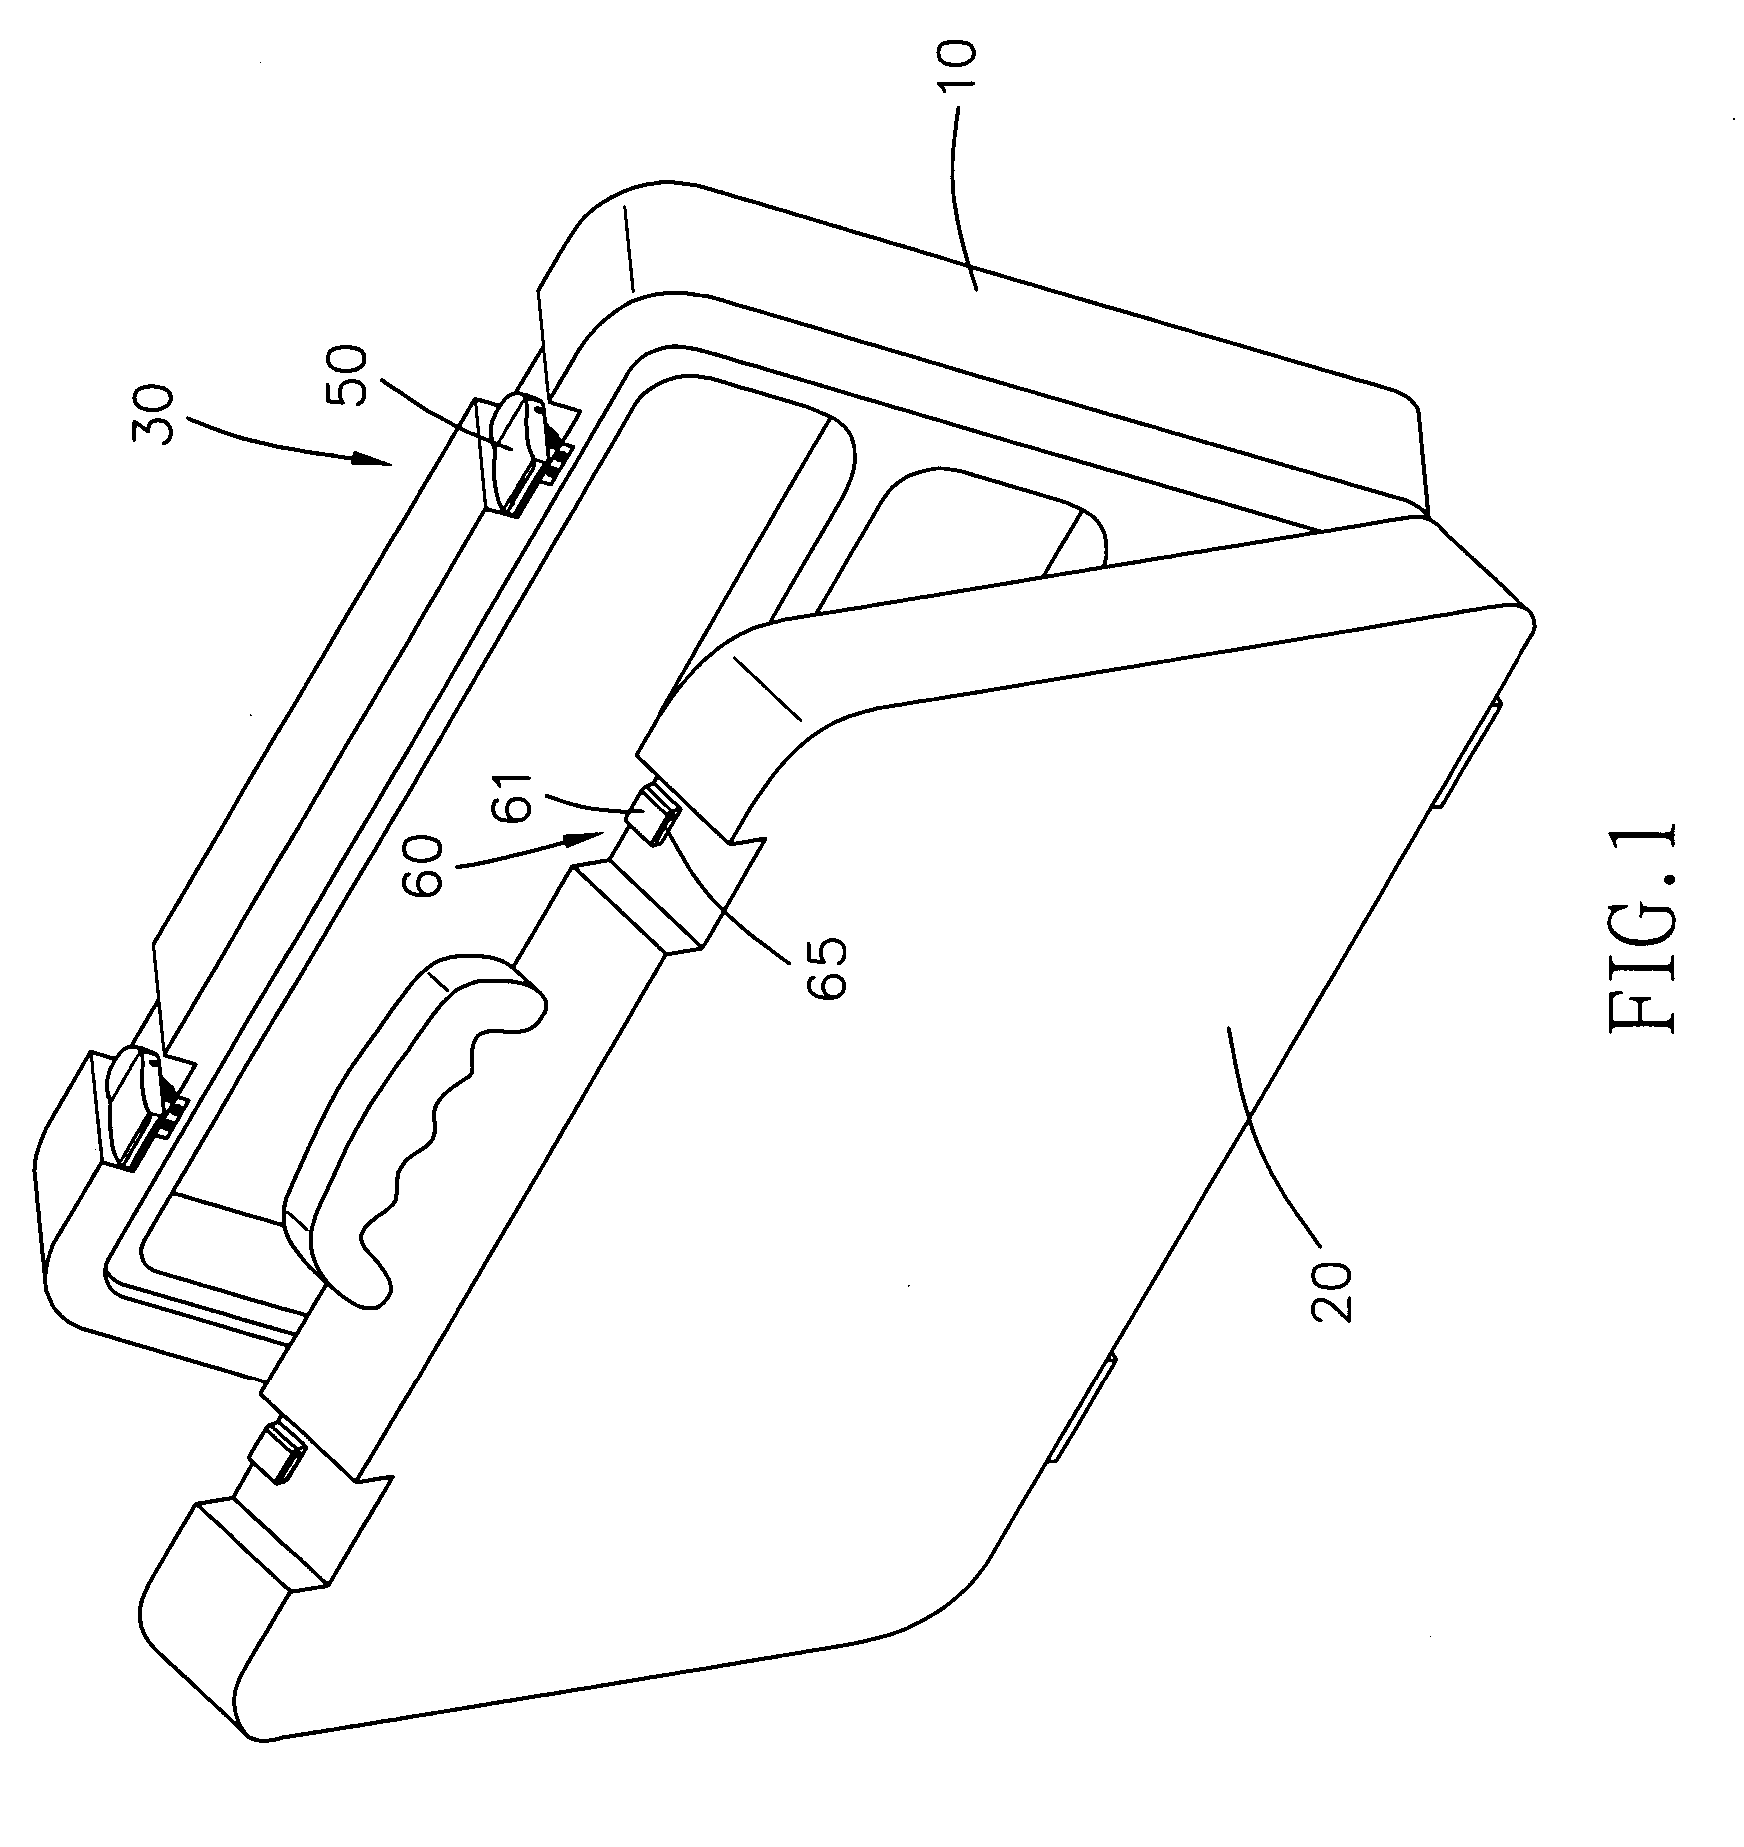 Tool box having a locking mechanism